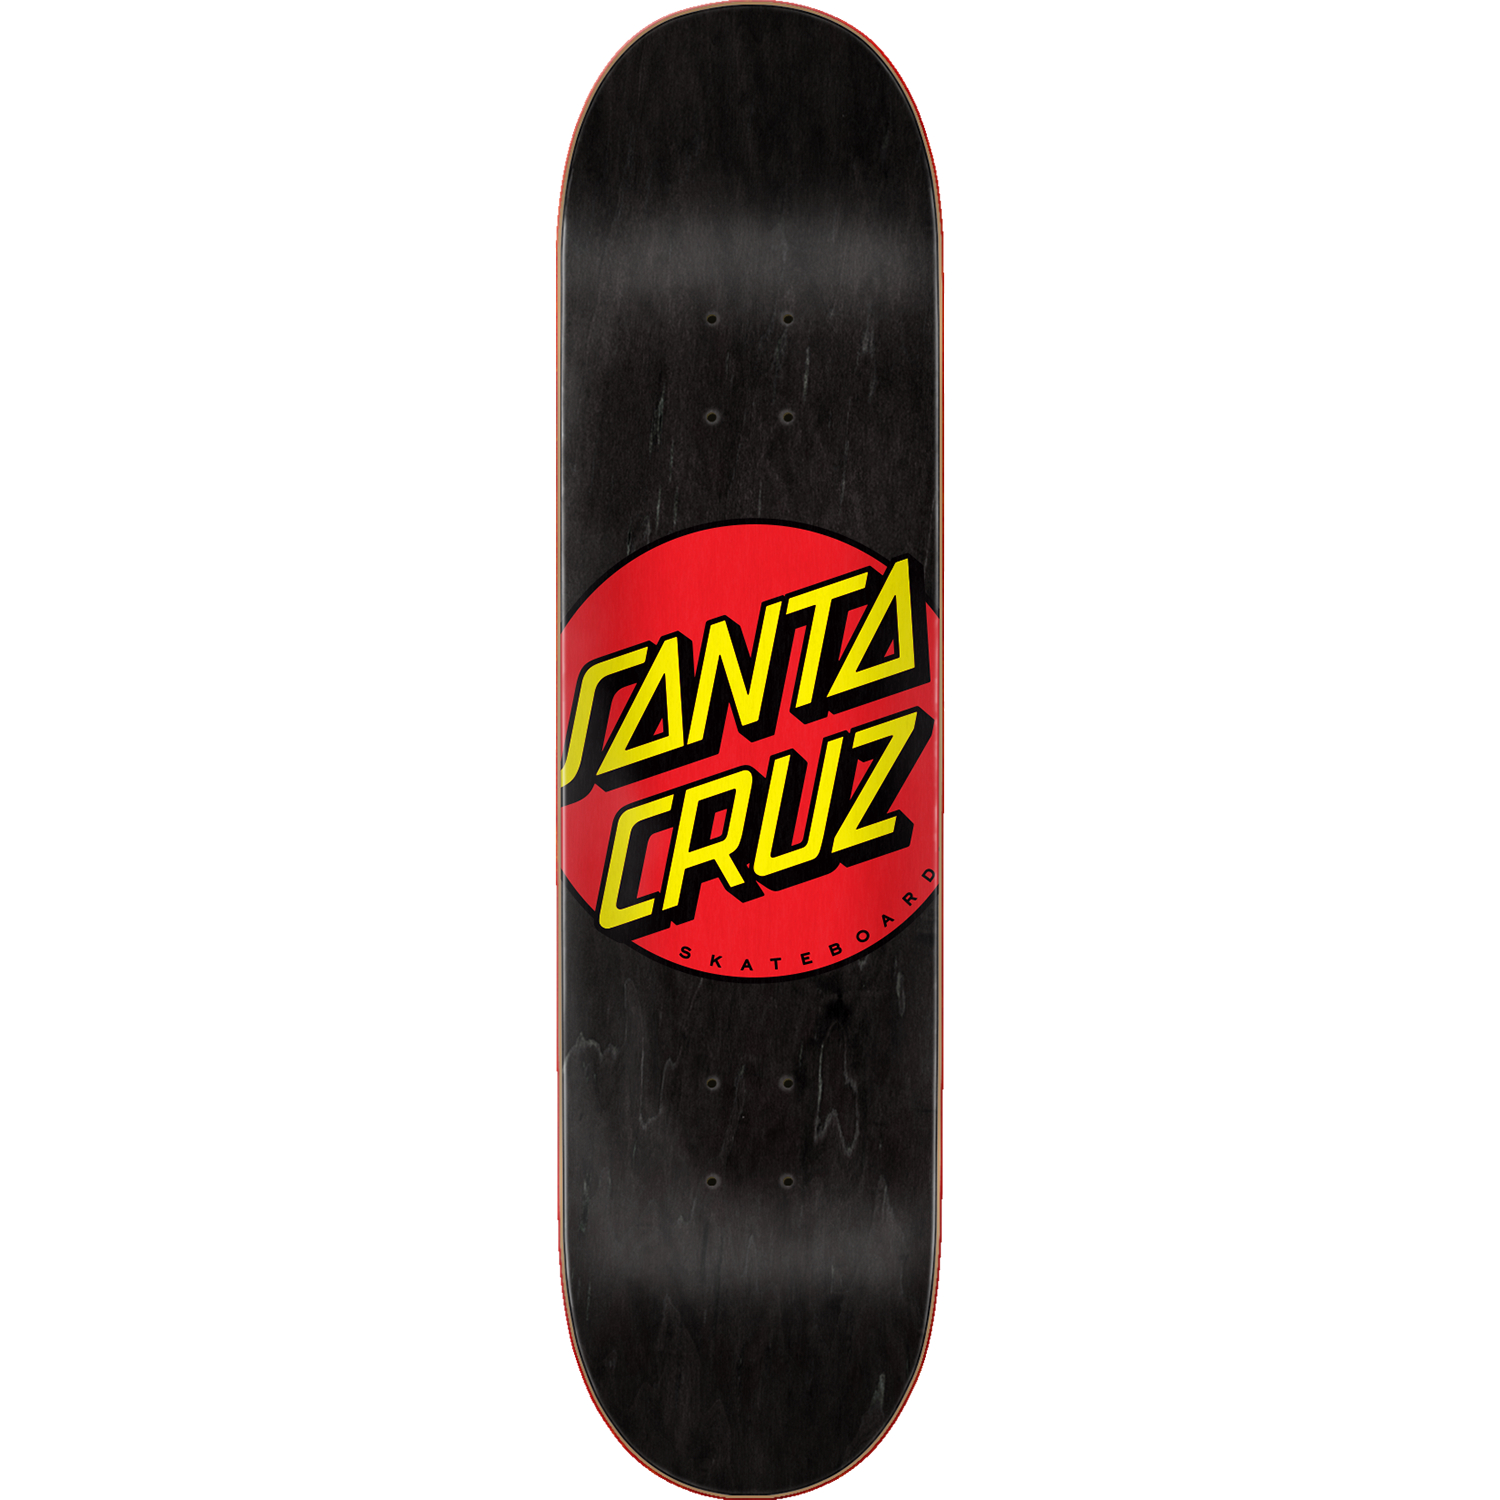 Santa Cruz Skateboard Deck Grabke Melting Clocks Reissue 9.7in x 29.4i